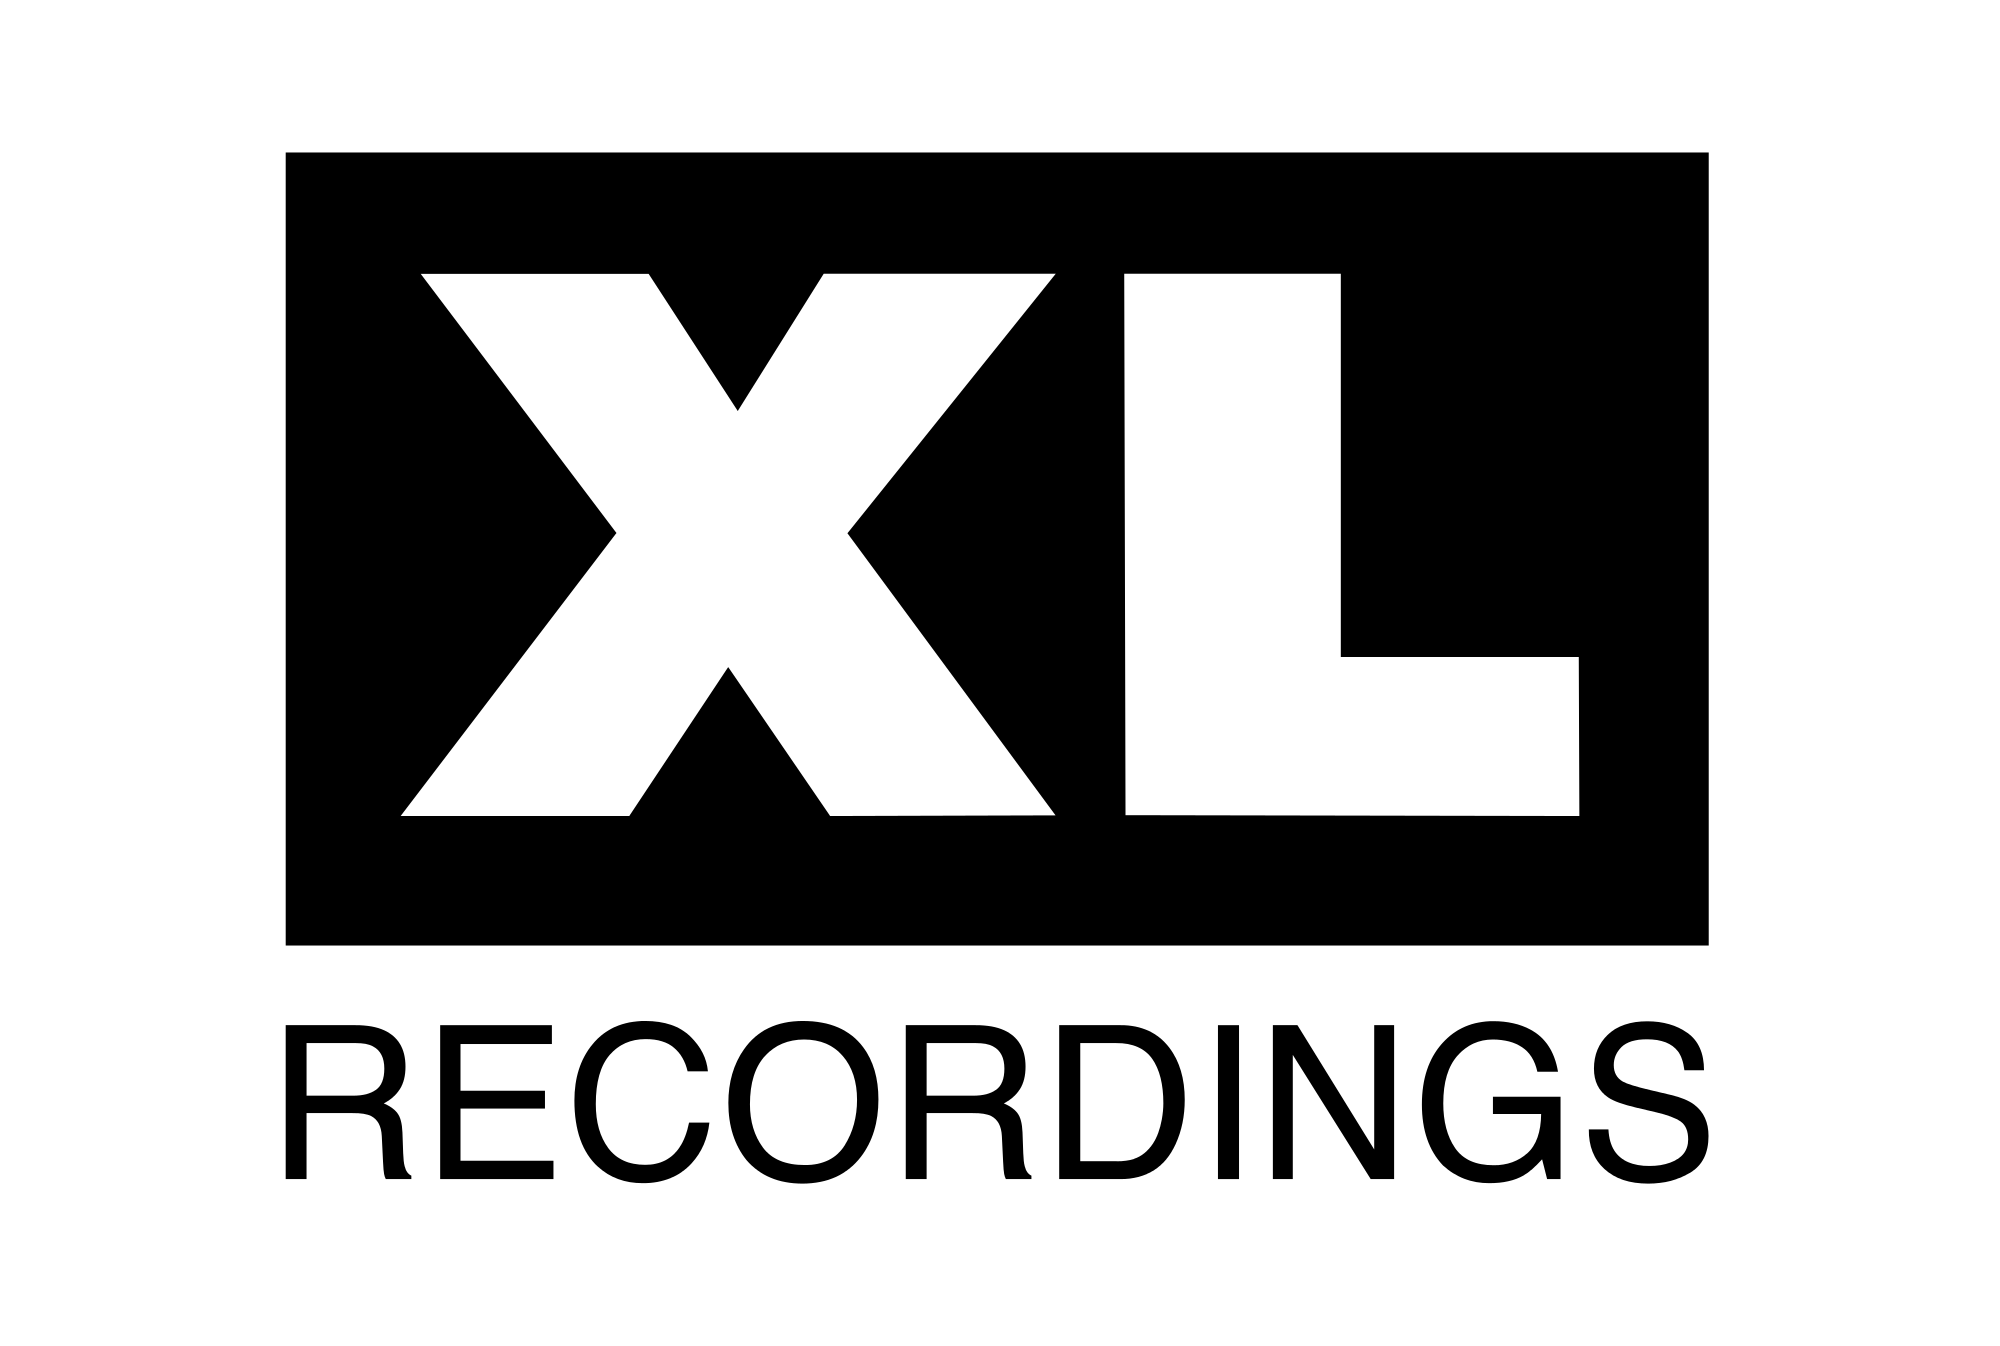 XL Recordings has announced 'The New Gen' album